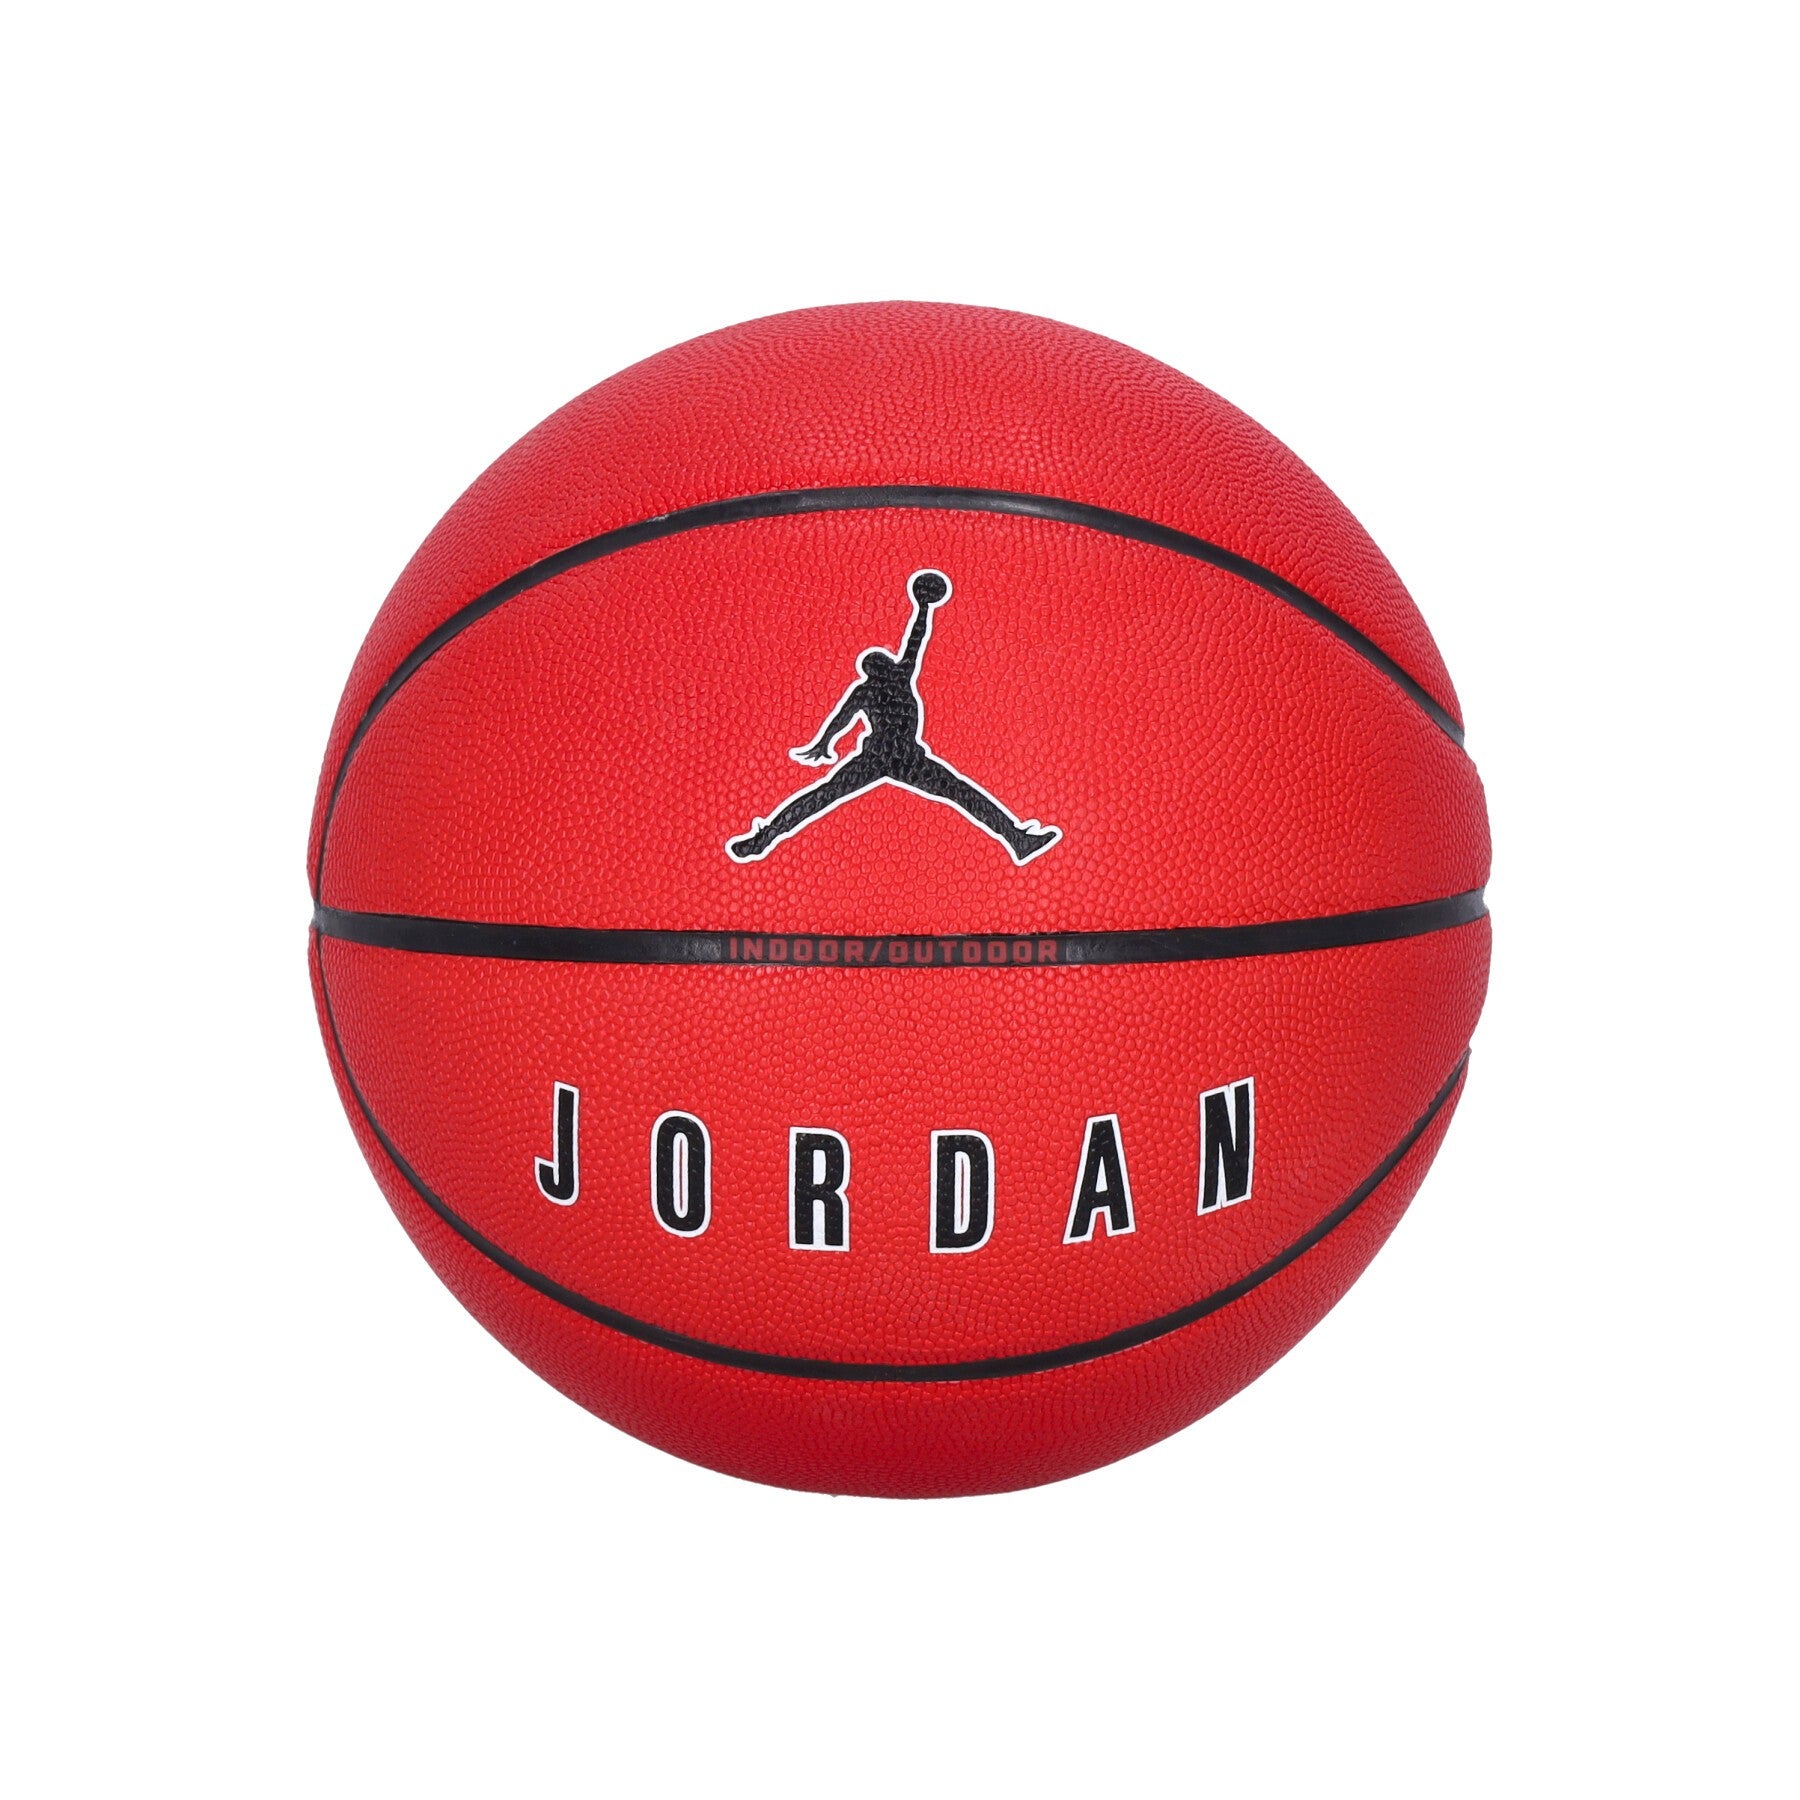 Jordan Nba, Pallone Uomo Ultimate Size 7, Red